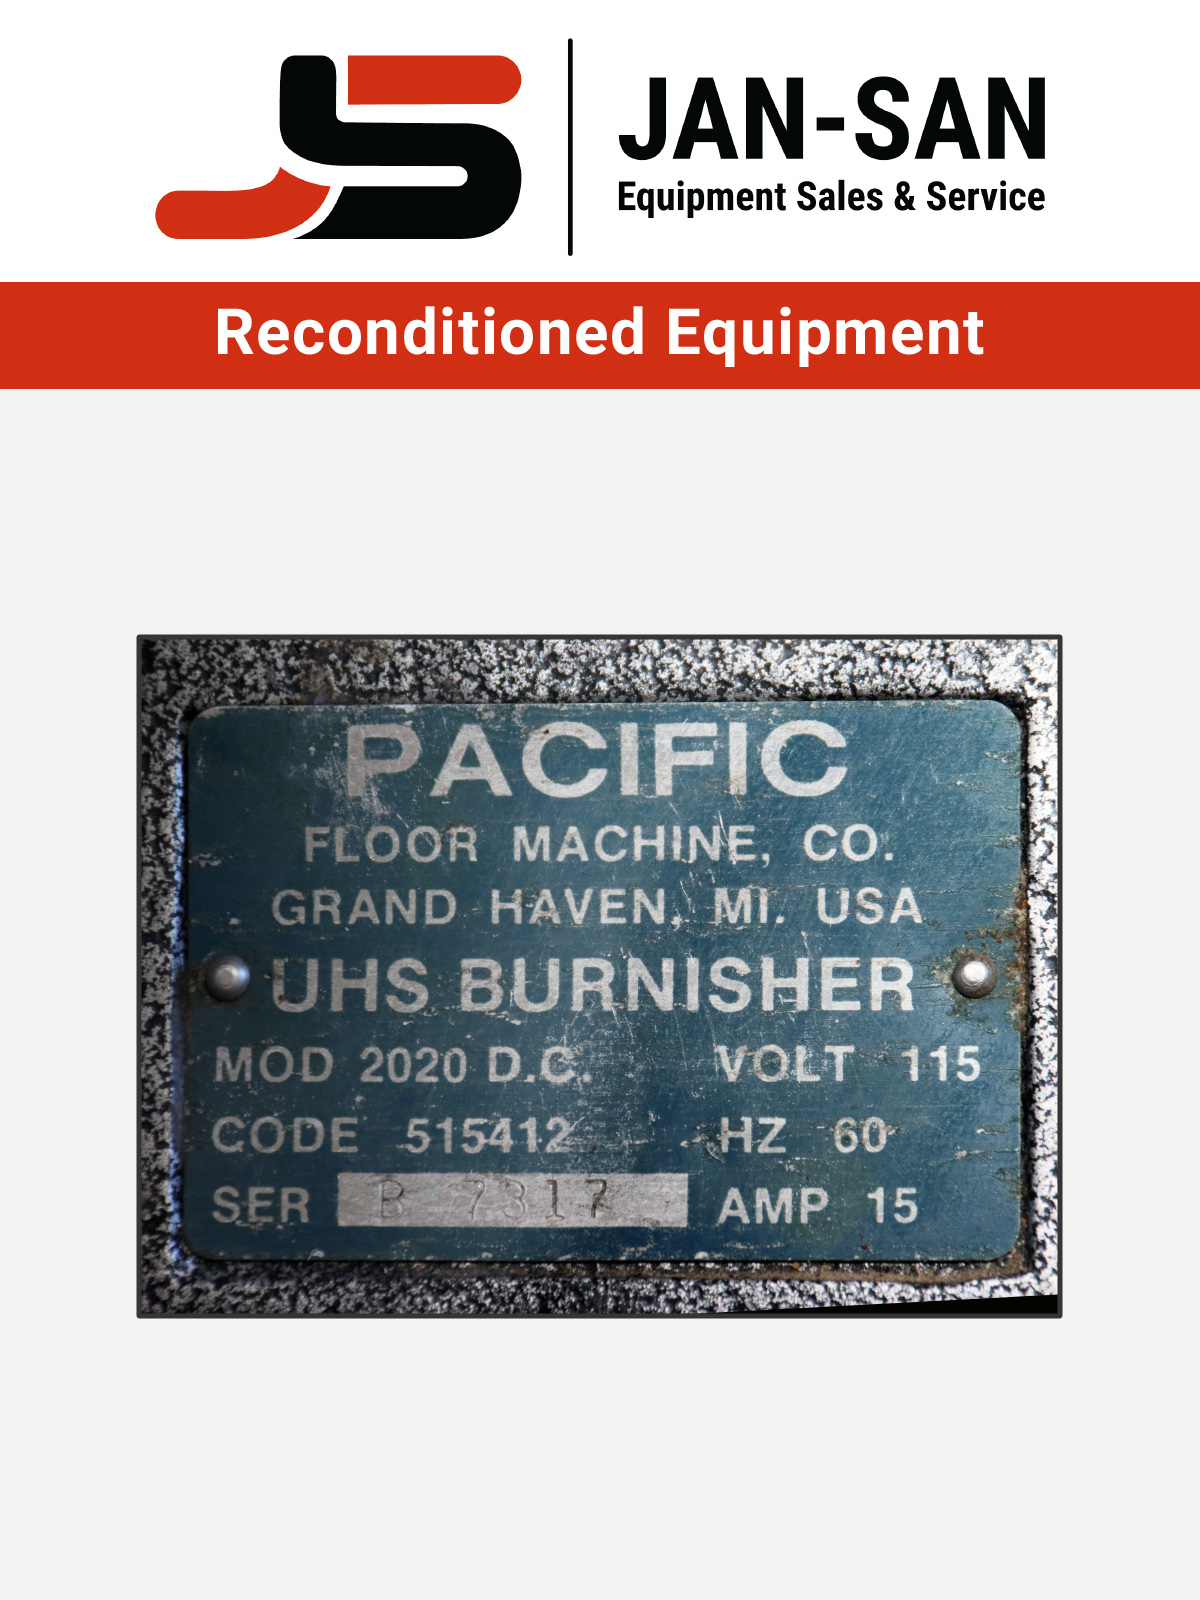 Pacific UHS Burnisher-515412